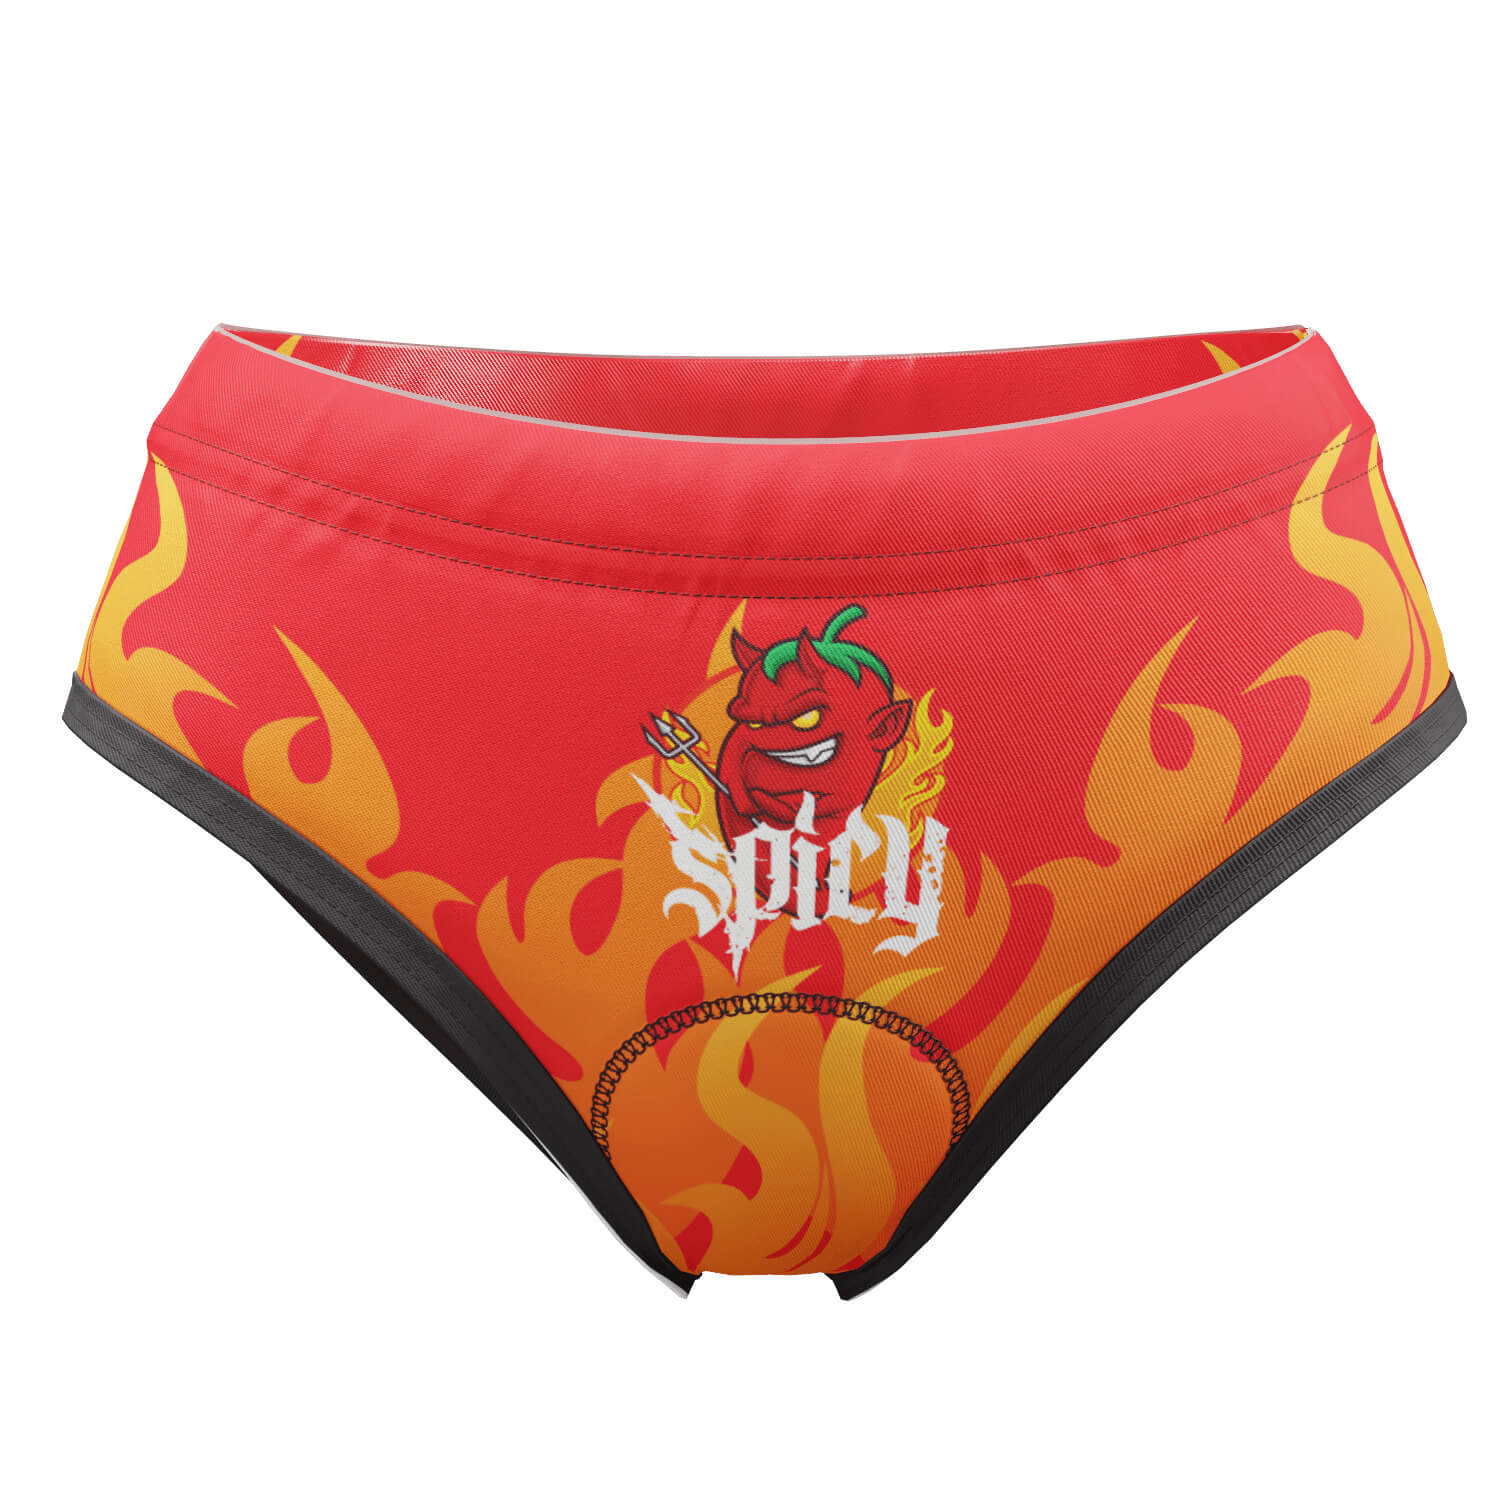 Women's Spicy Flames Gel Padded Cycling Underwear-Briefs